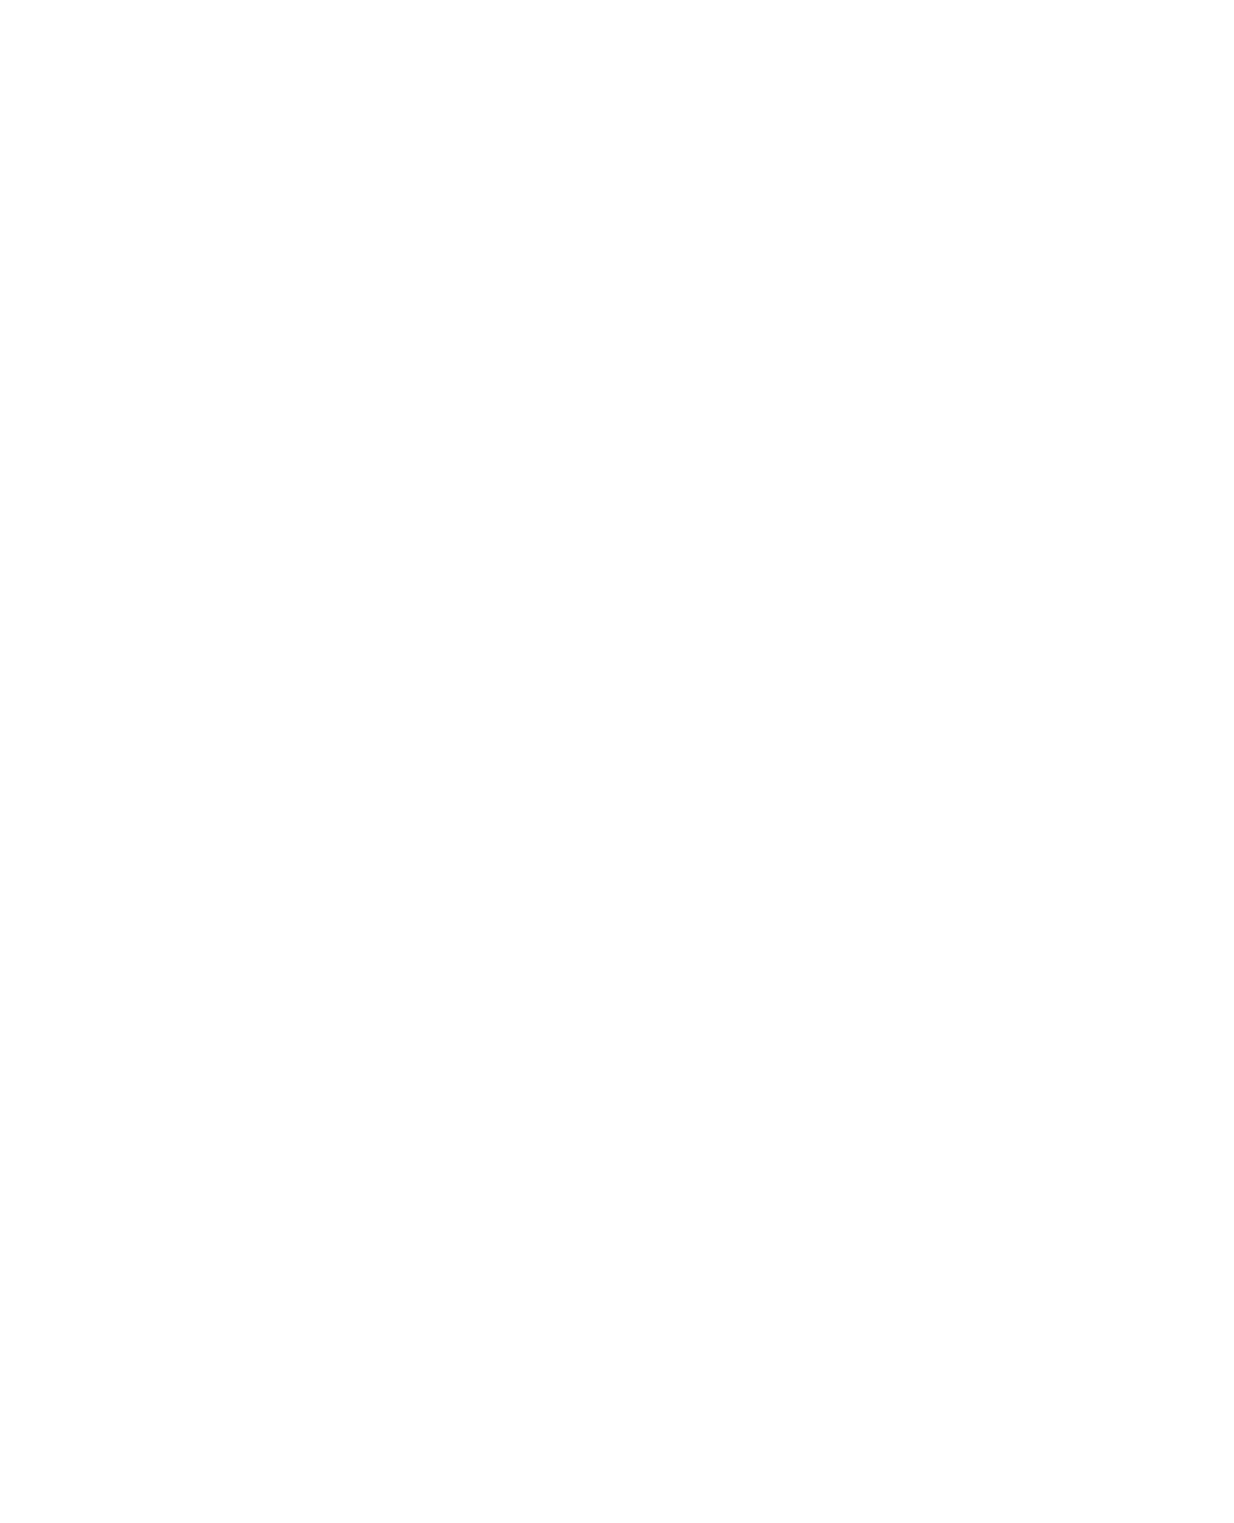 PetGas (Petronas Gas) logo for dark backgrounds (transparent PNG)